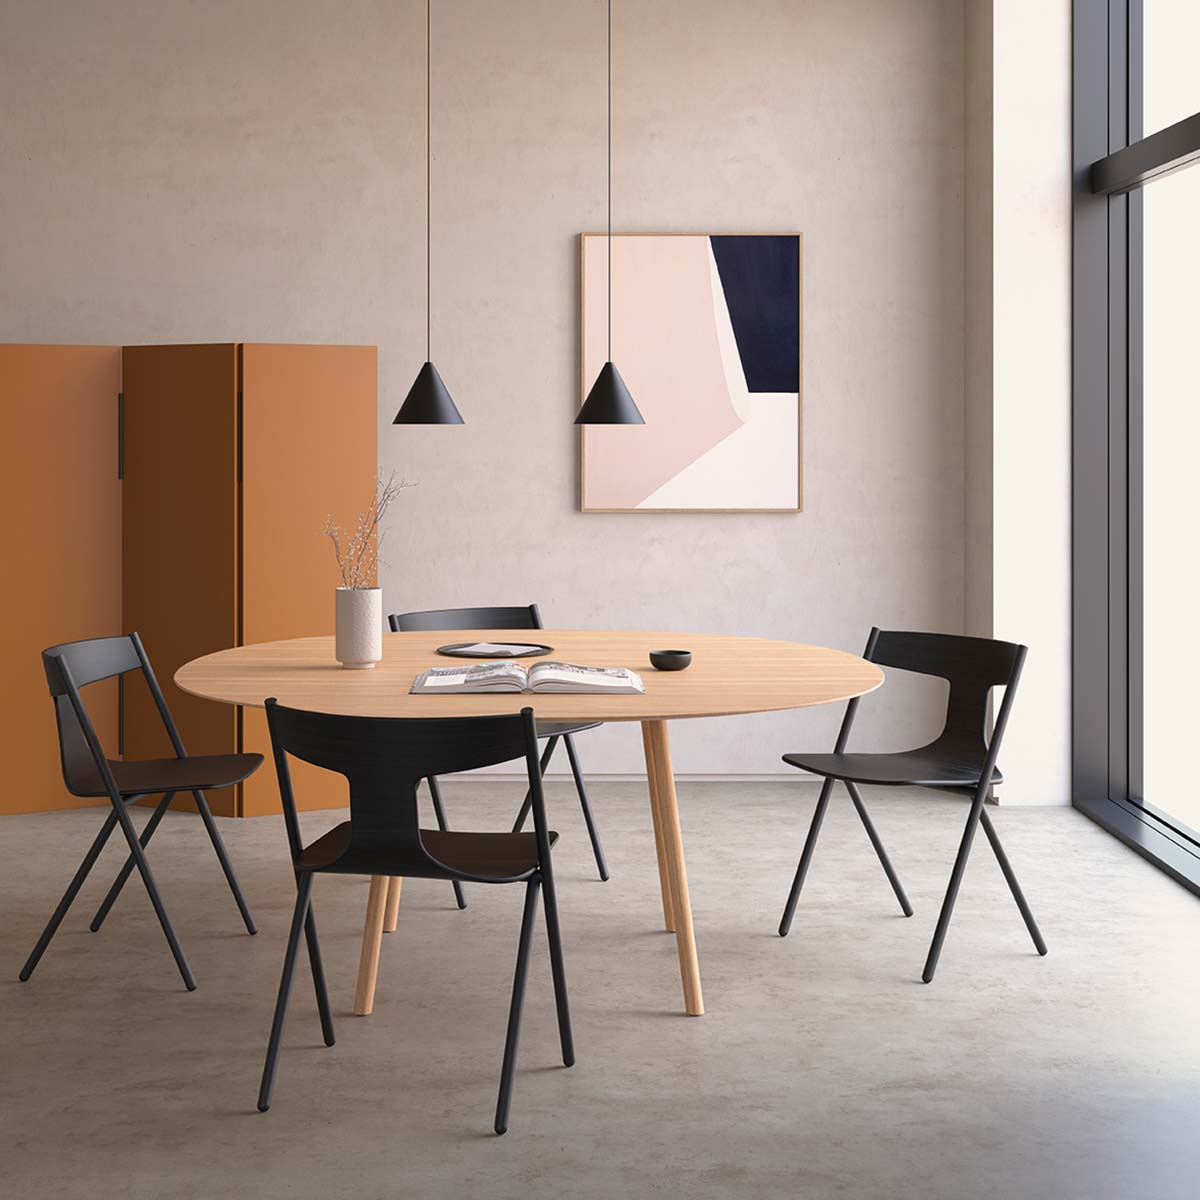 Quadra chair by Viccarbe - Design Mario Ferrarini